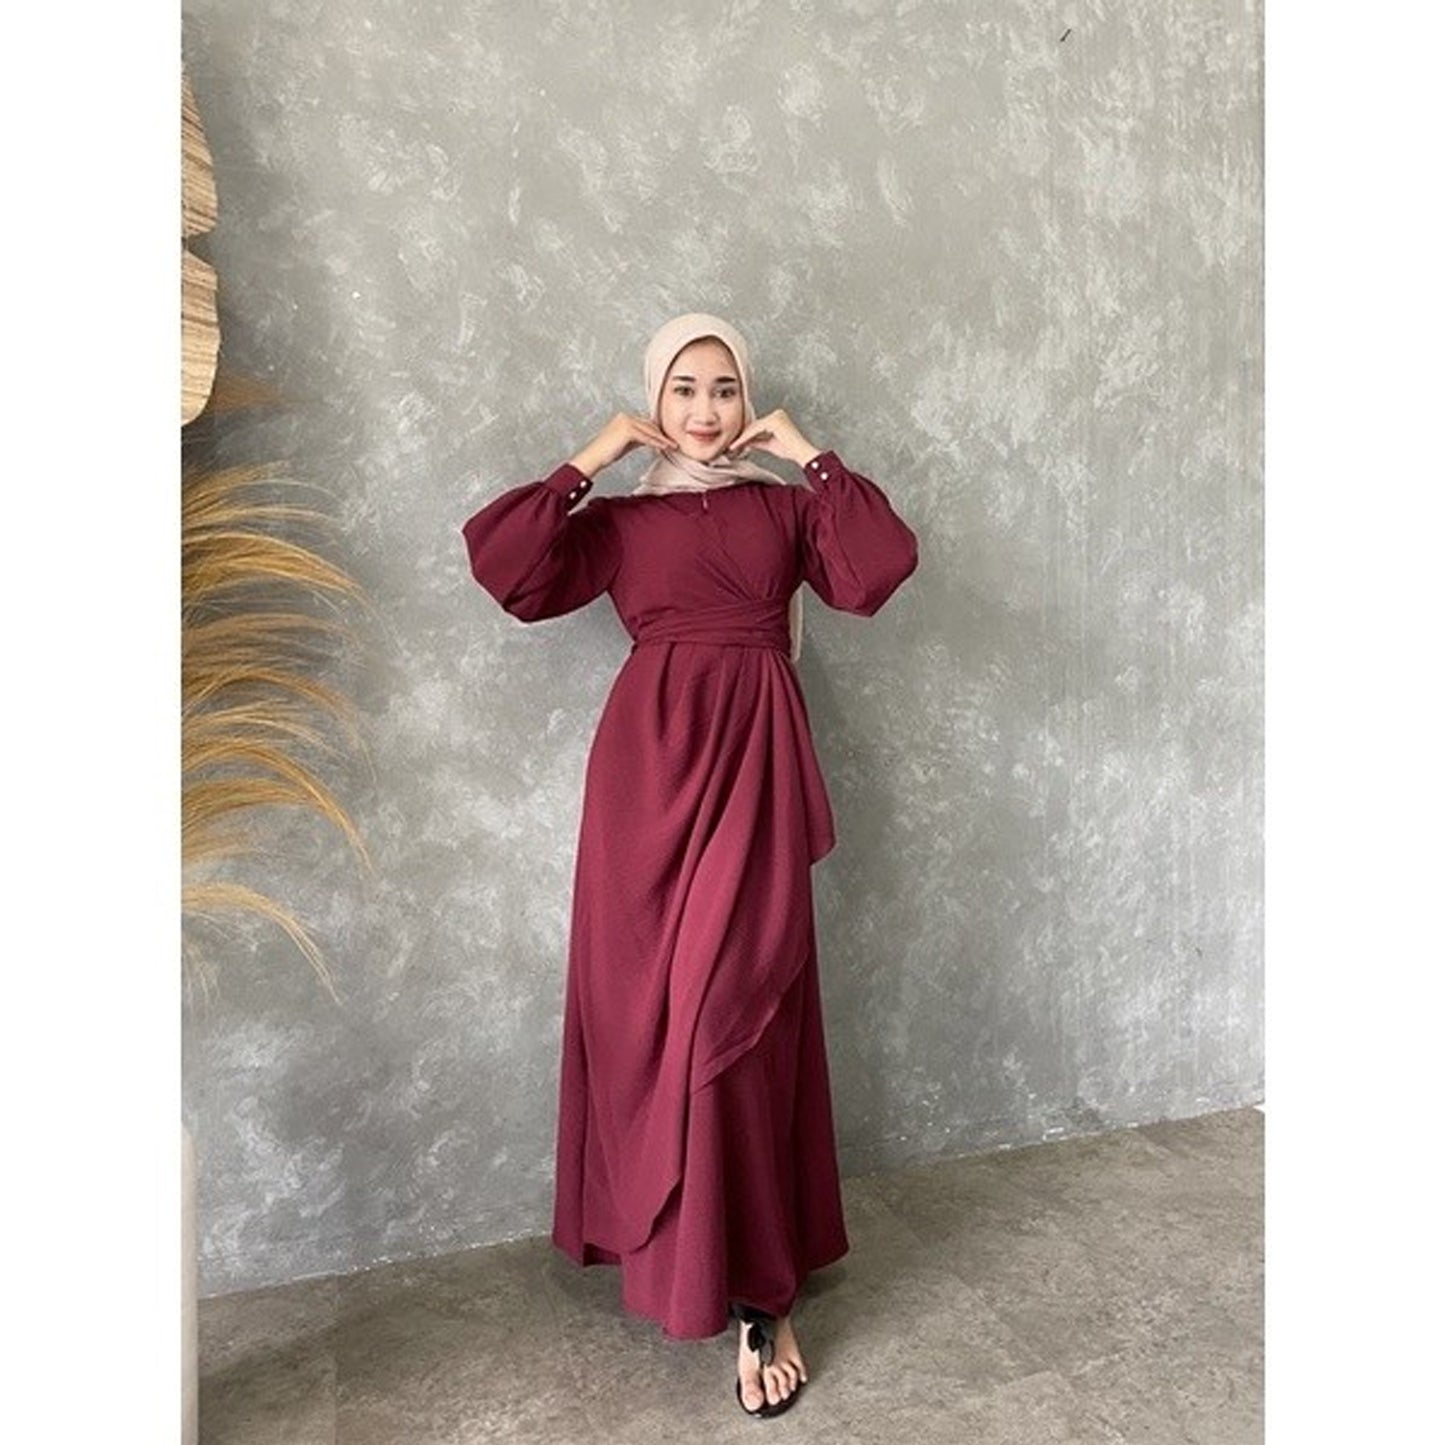 Sada Dress Jumbo: Embrace Modesty with the Muslim Fashion Trends, Islamic Dress, Khimar dress, Muslim Dress, Islamic Dress, Women Dress